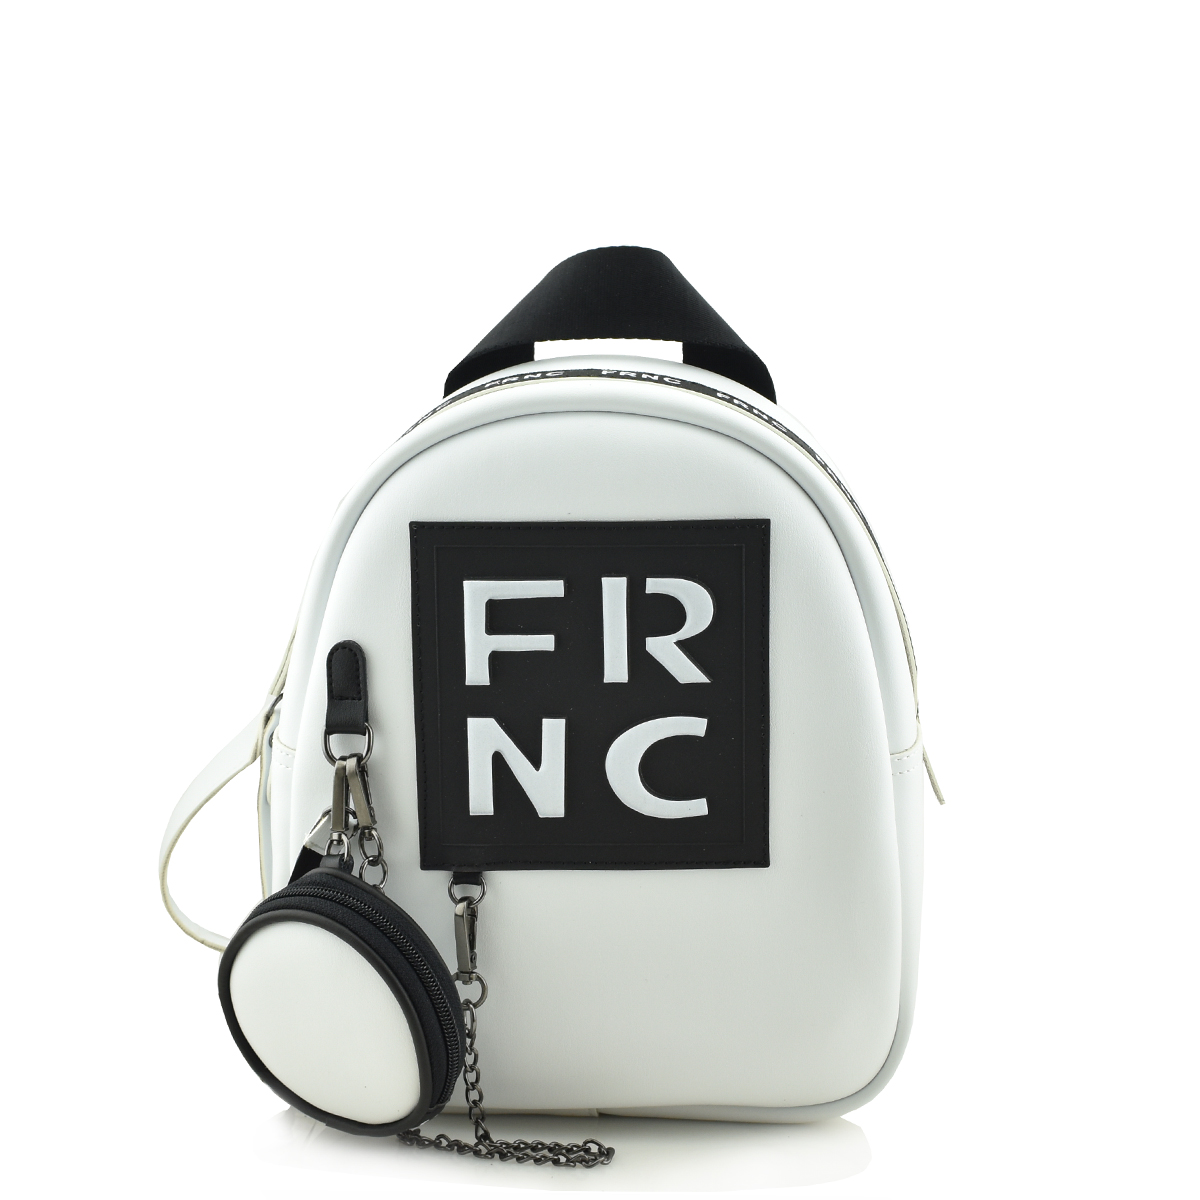 FRNC - FRANCESCO CLASSIC MINI BACKPACK - 1672 WHITE